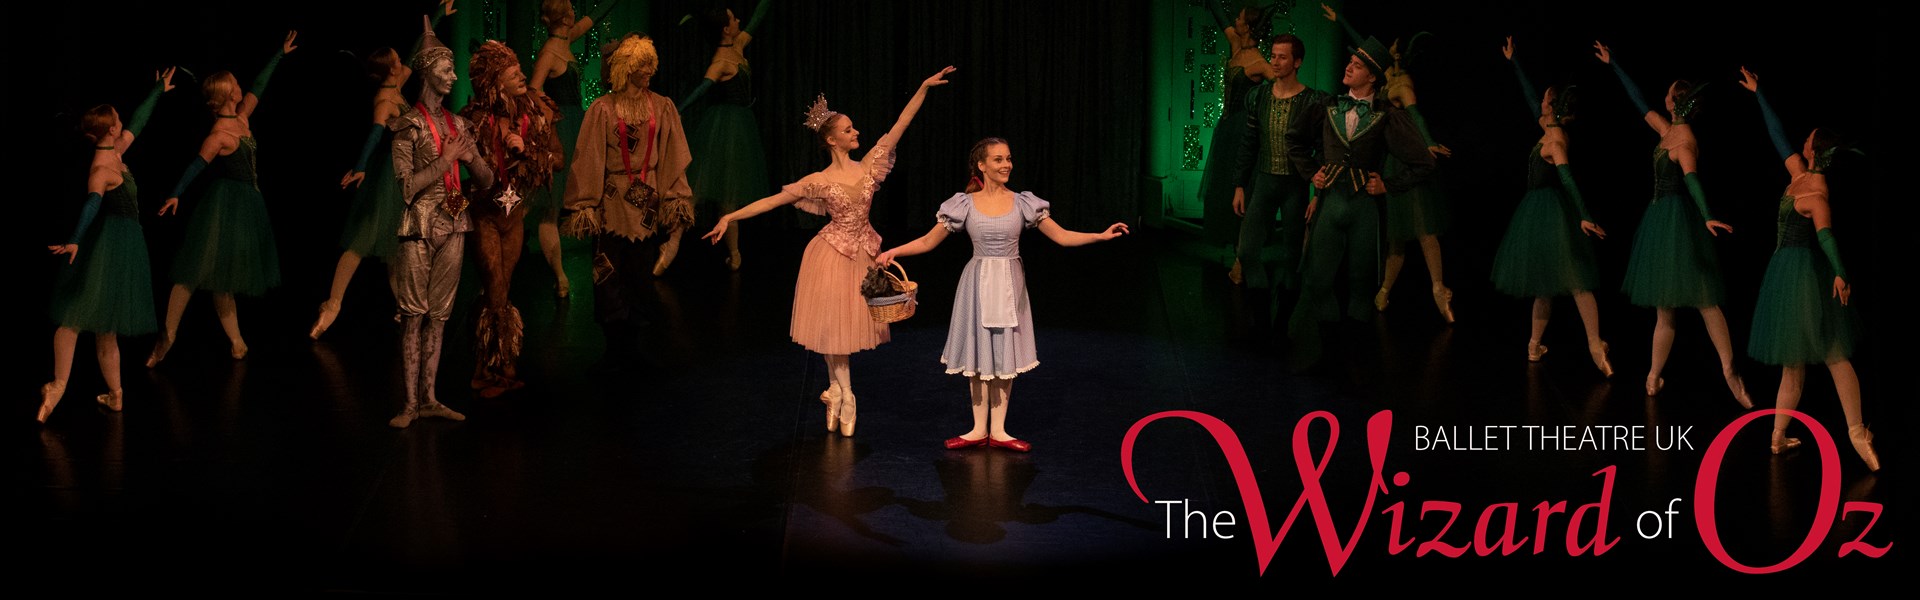 The Wizard of Oz - Ballet Theatre UK